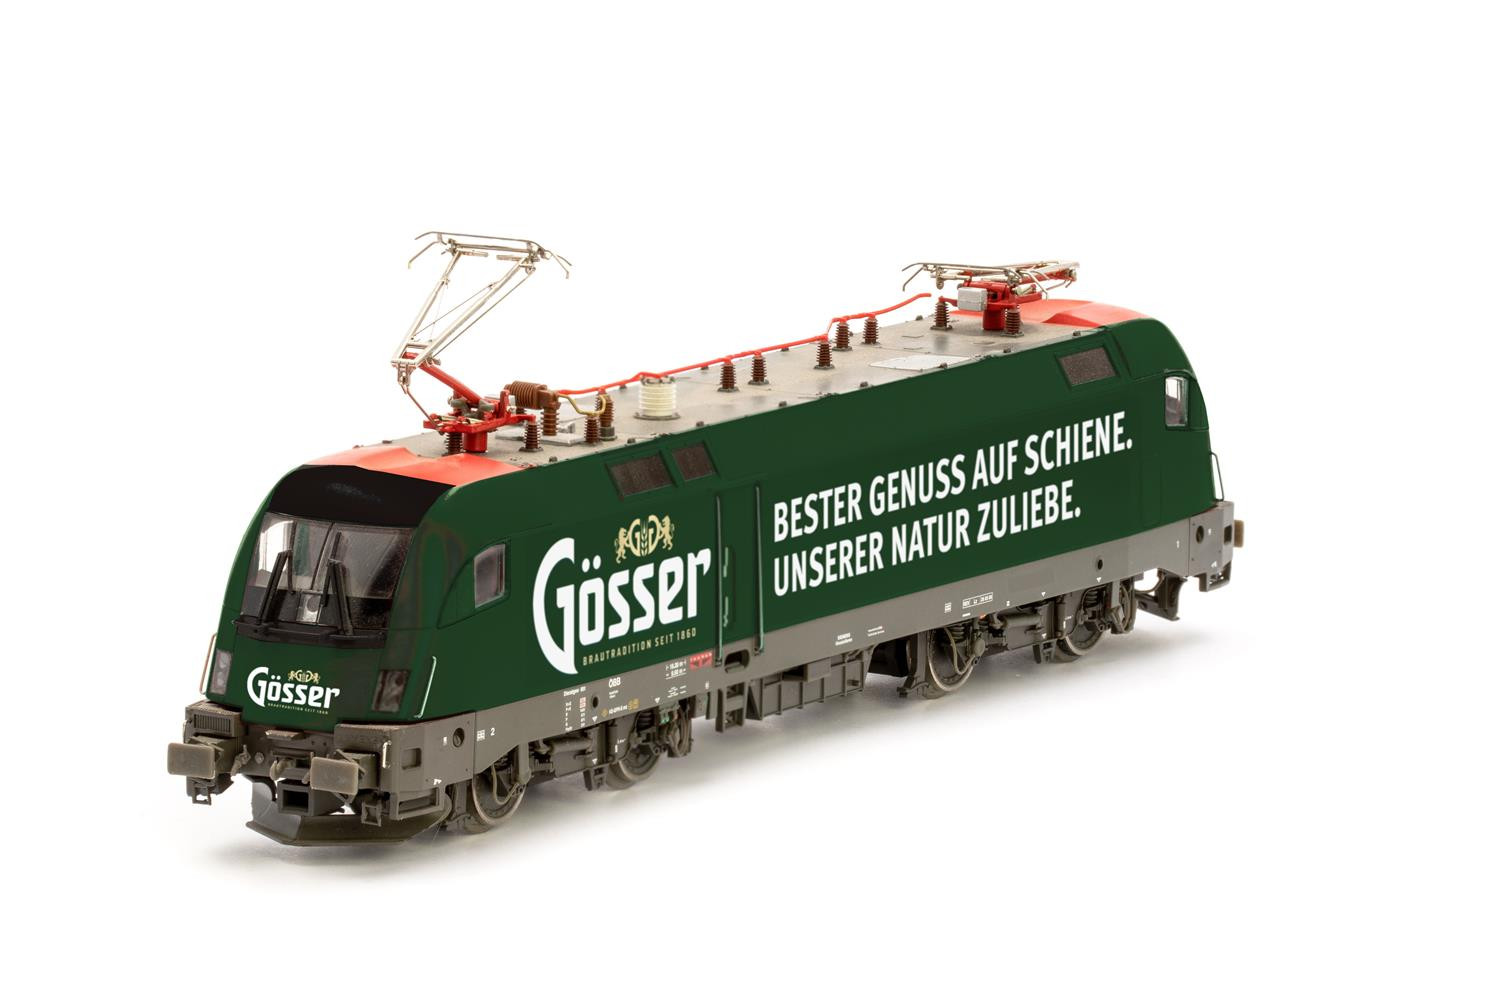 OBB Rh1016 021 Gosser Bier Electric Locomotive IV